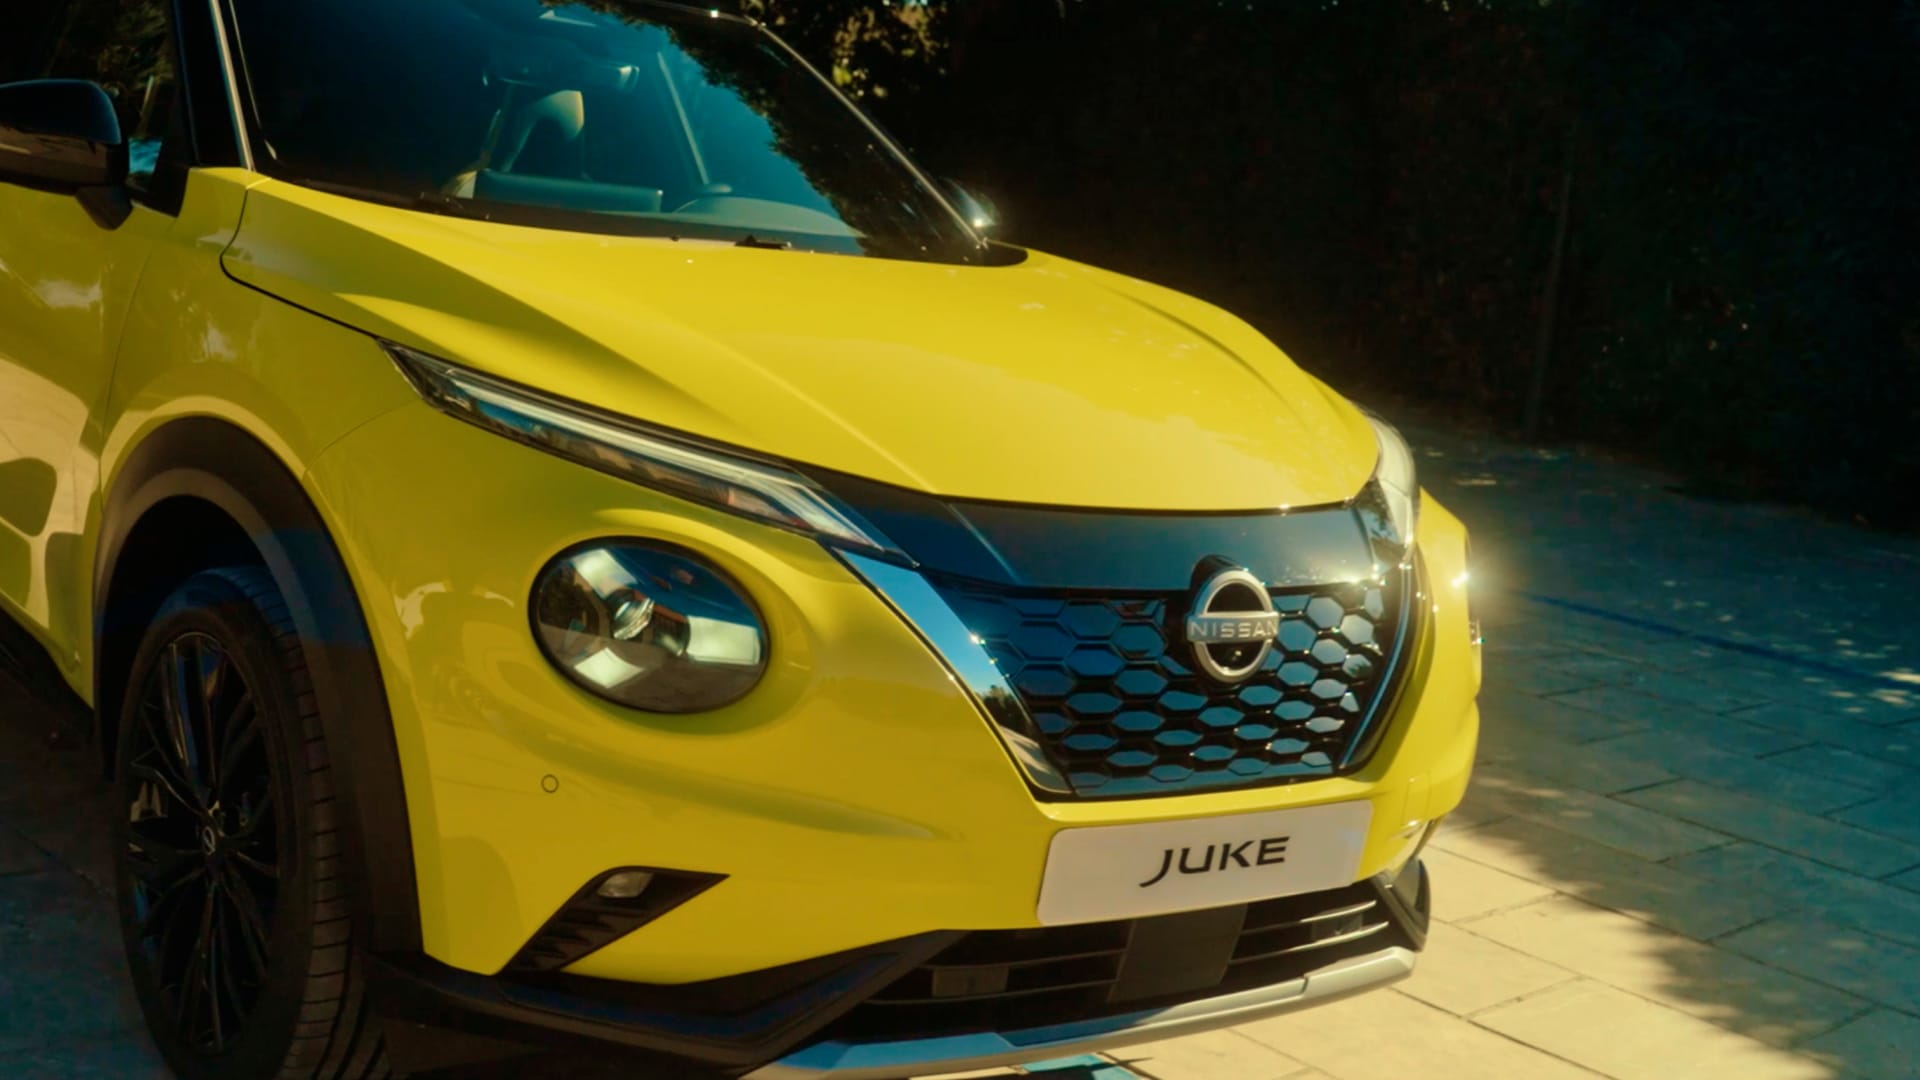 Nissan JUKE exterior front design video loop